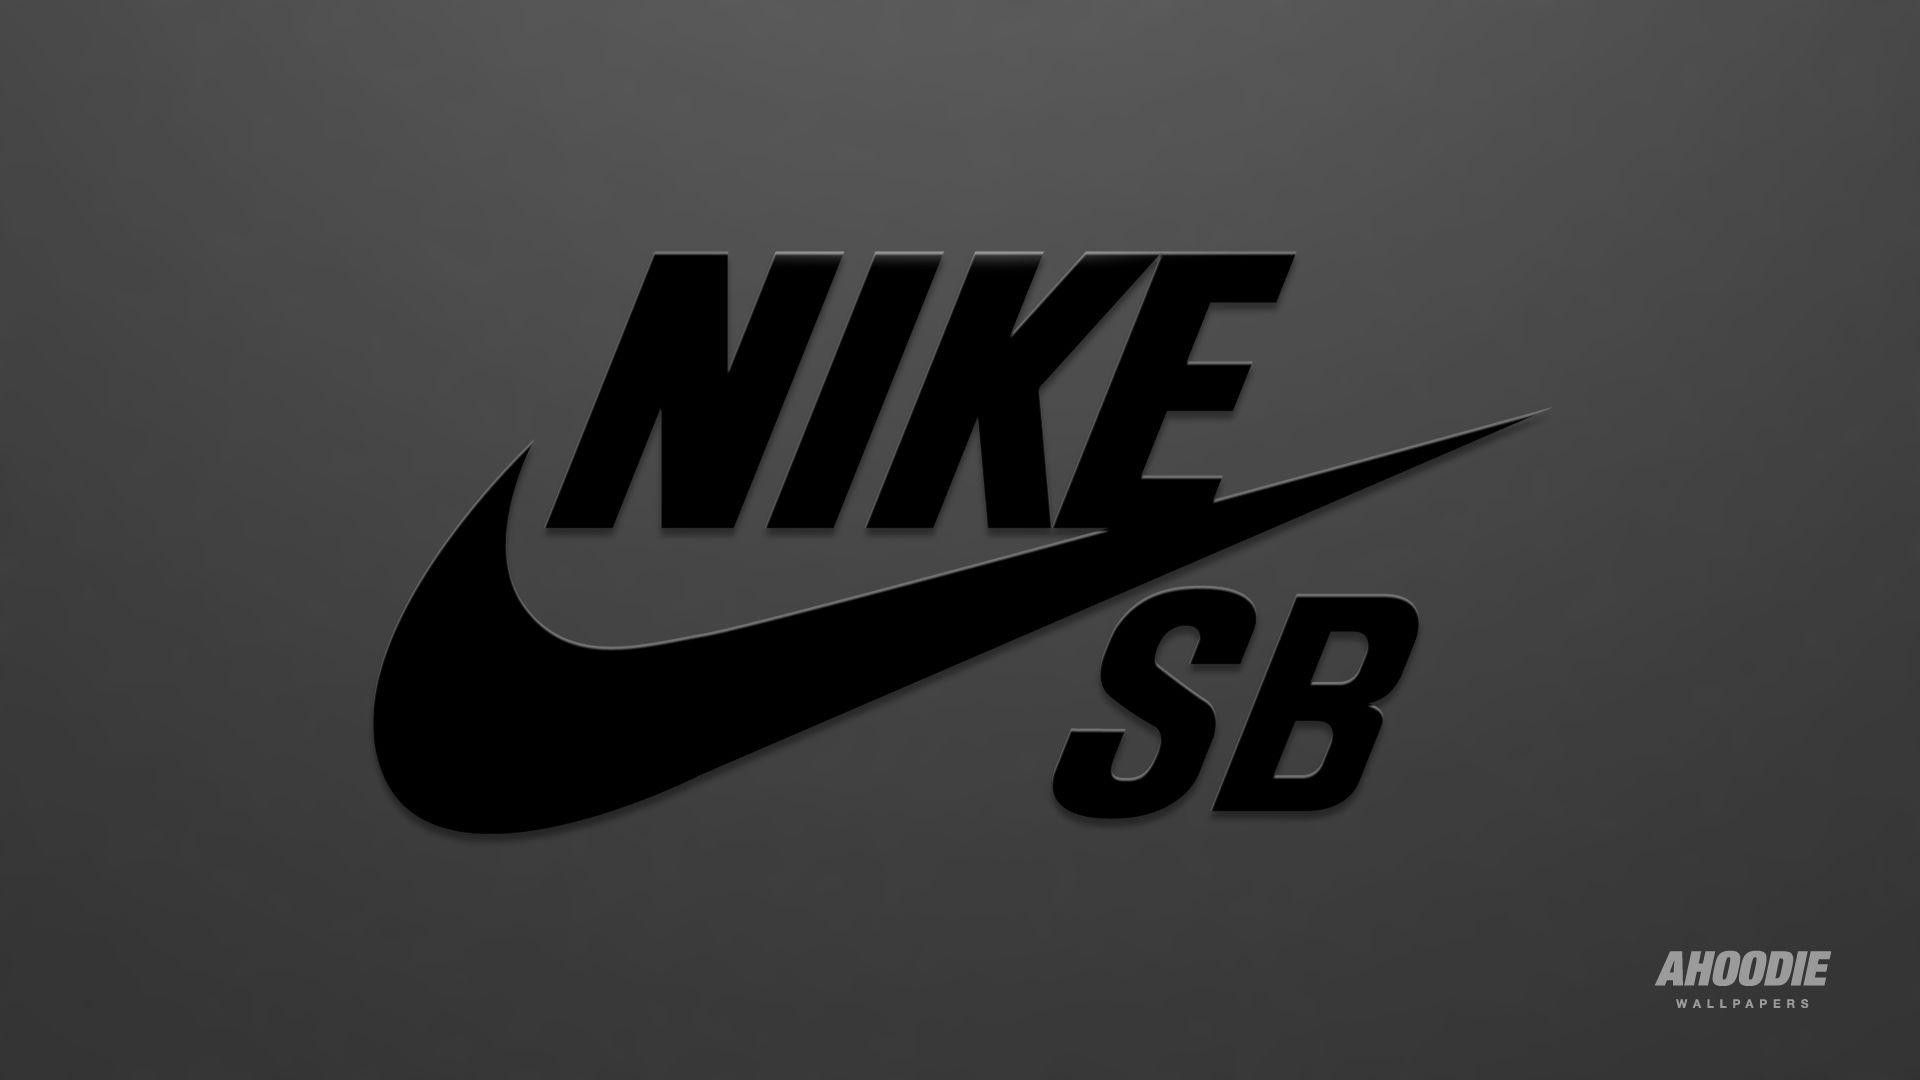 Nike SB Wallpaper Free Nike SB Background